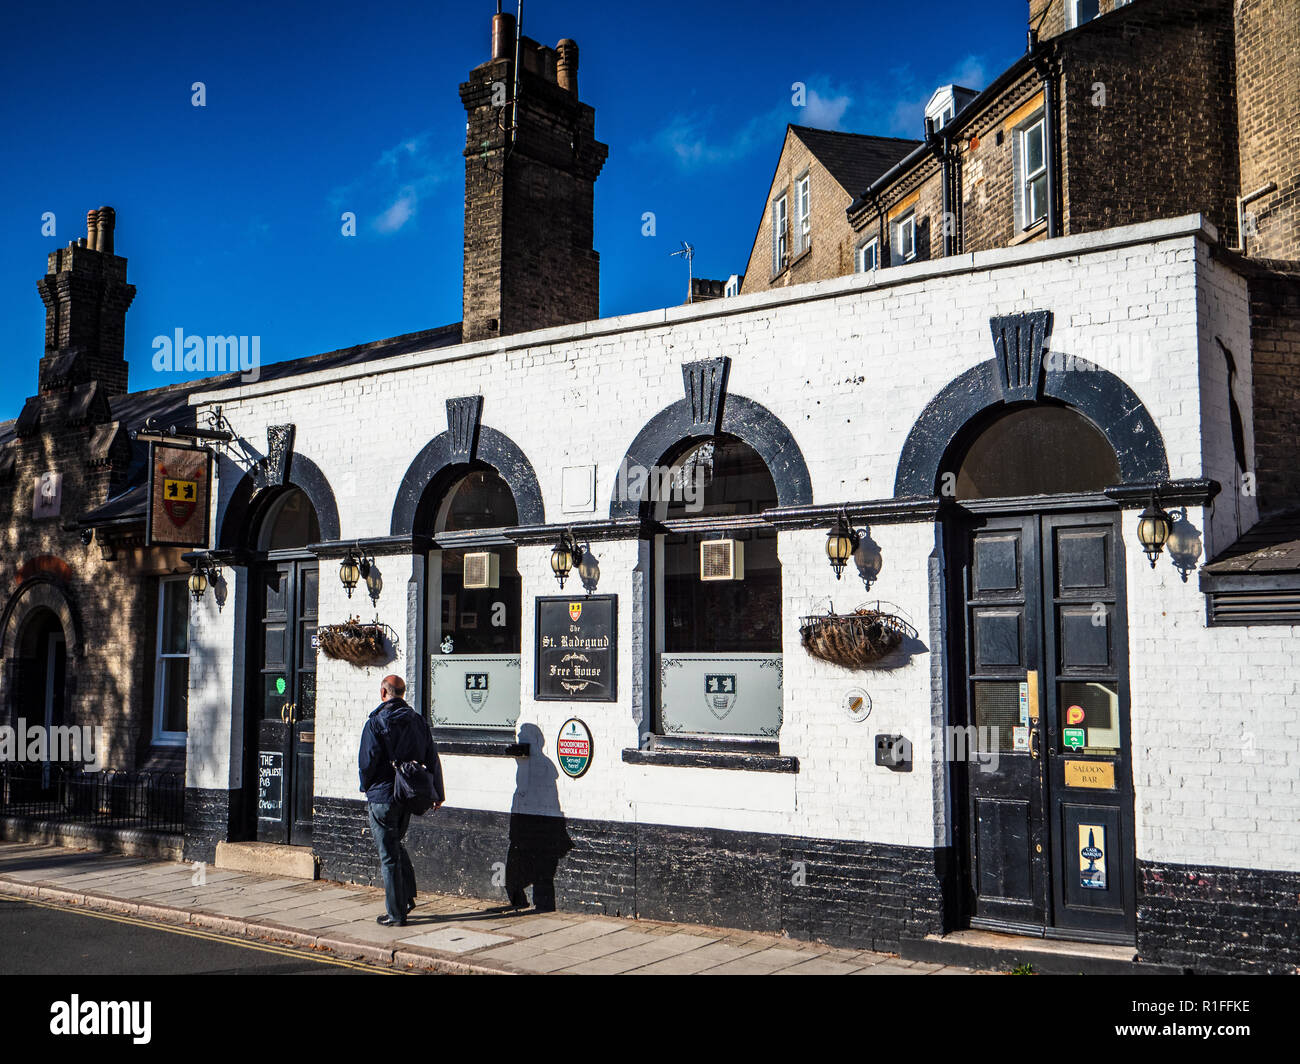 The St Radegund pub in King Street, central Cambridge. It is the smallest pub in Cambridge. Stock Photo